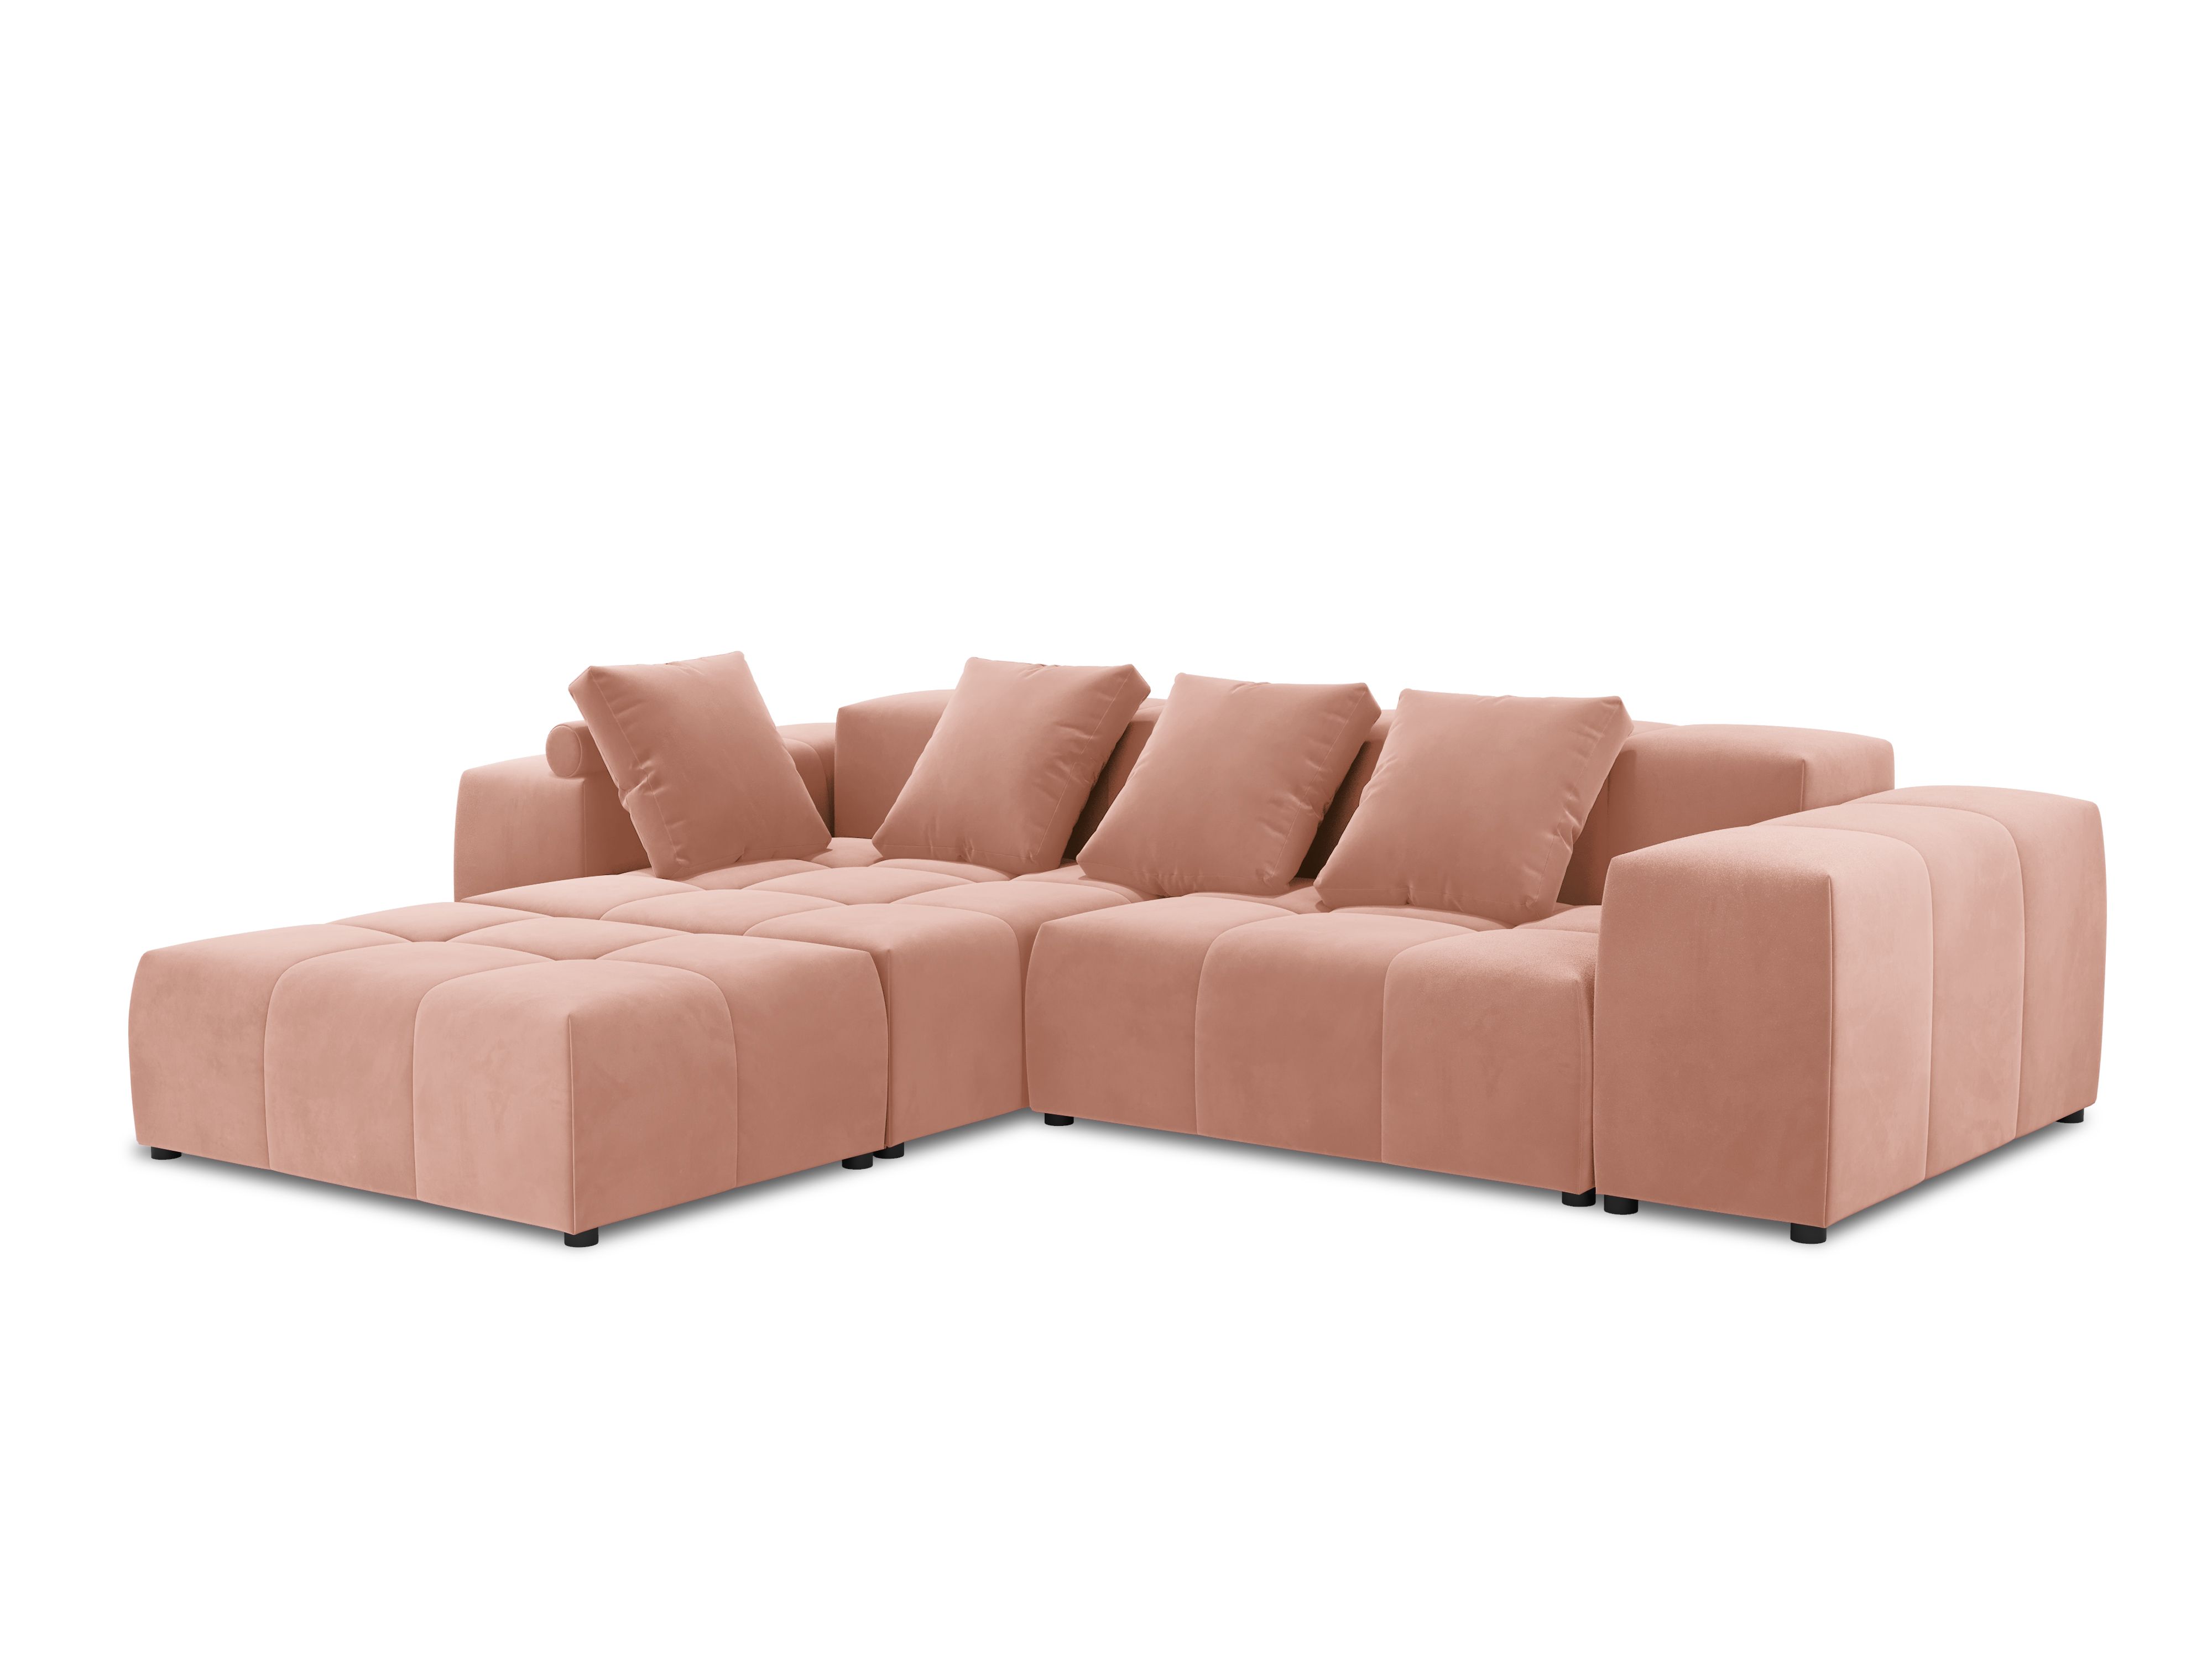 Canapé d'angle 5 places Rose Tissu Moderne Confort